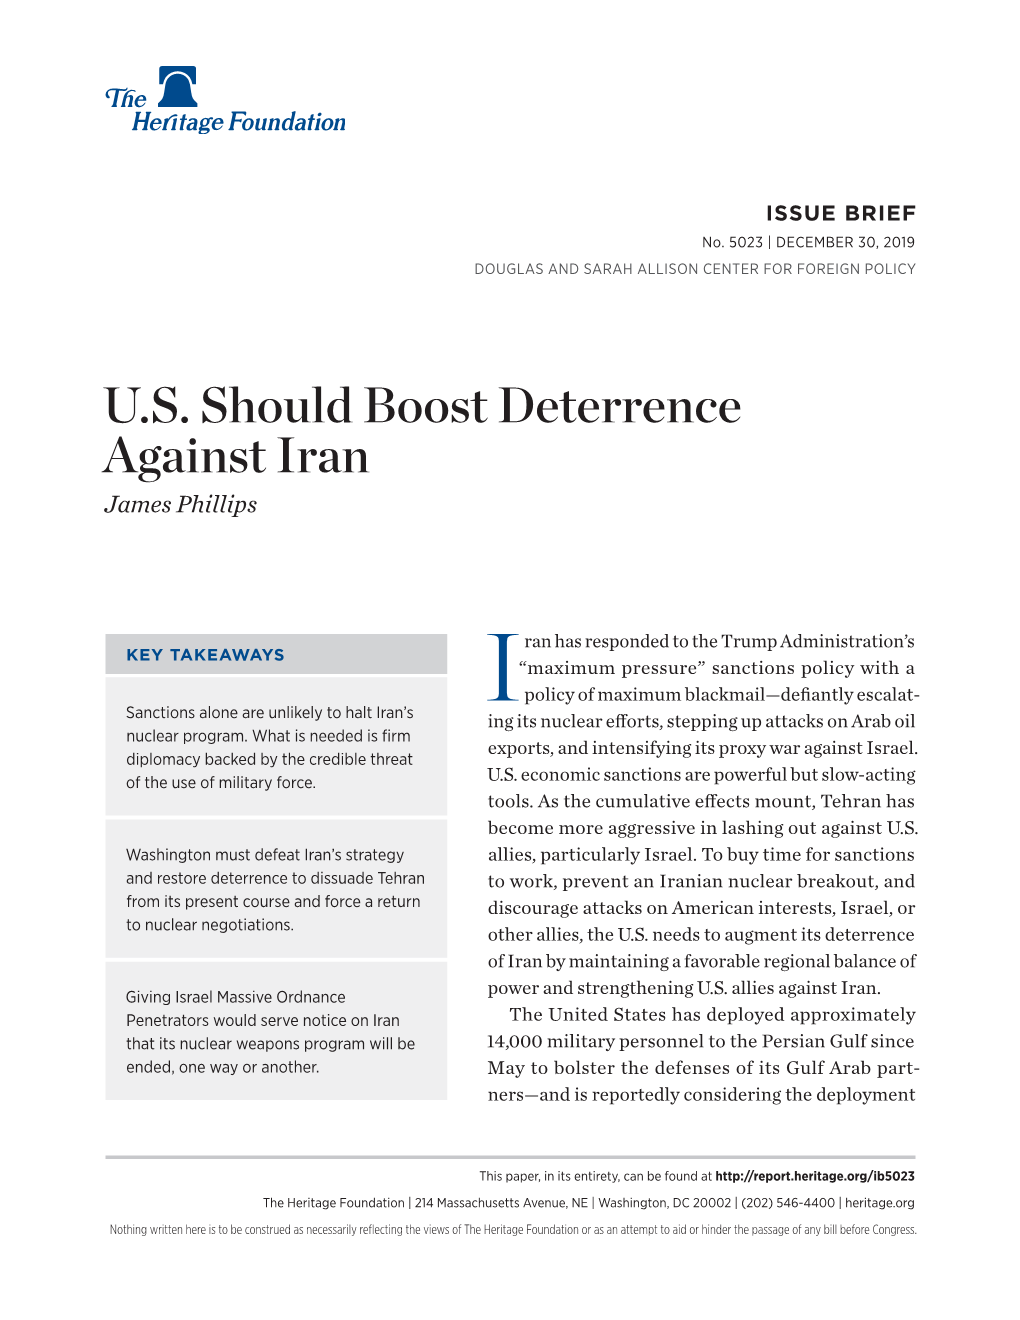 U.S. Should Boost Deterrence Against Iran James Phillips